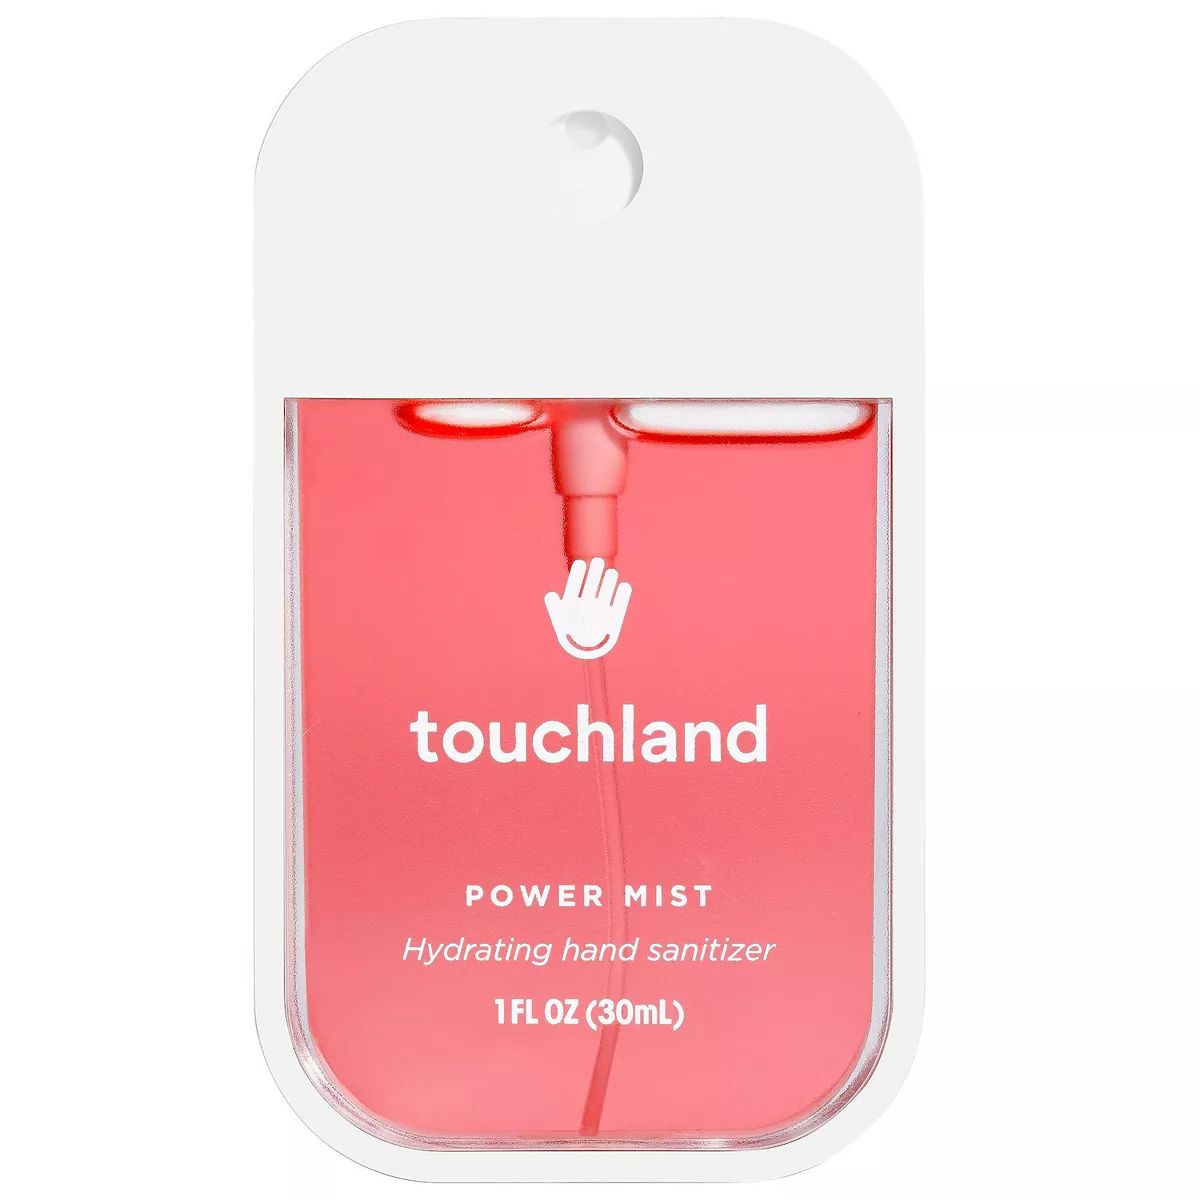 Touchland Power Mist Hydrating Hand Sanitizer | Kohl's